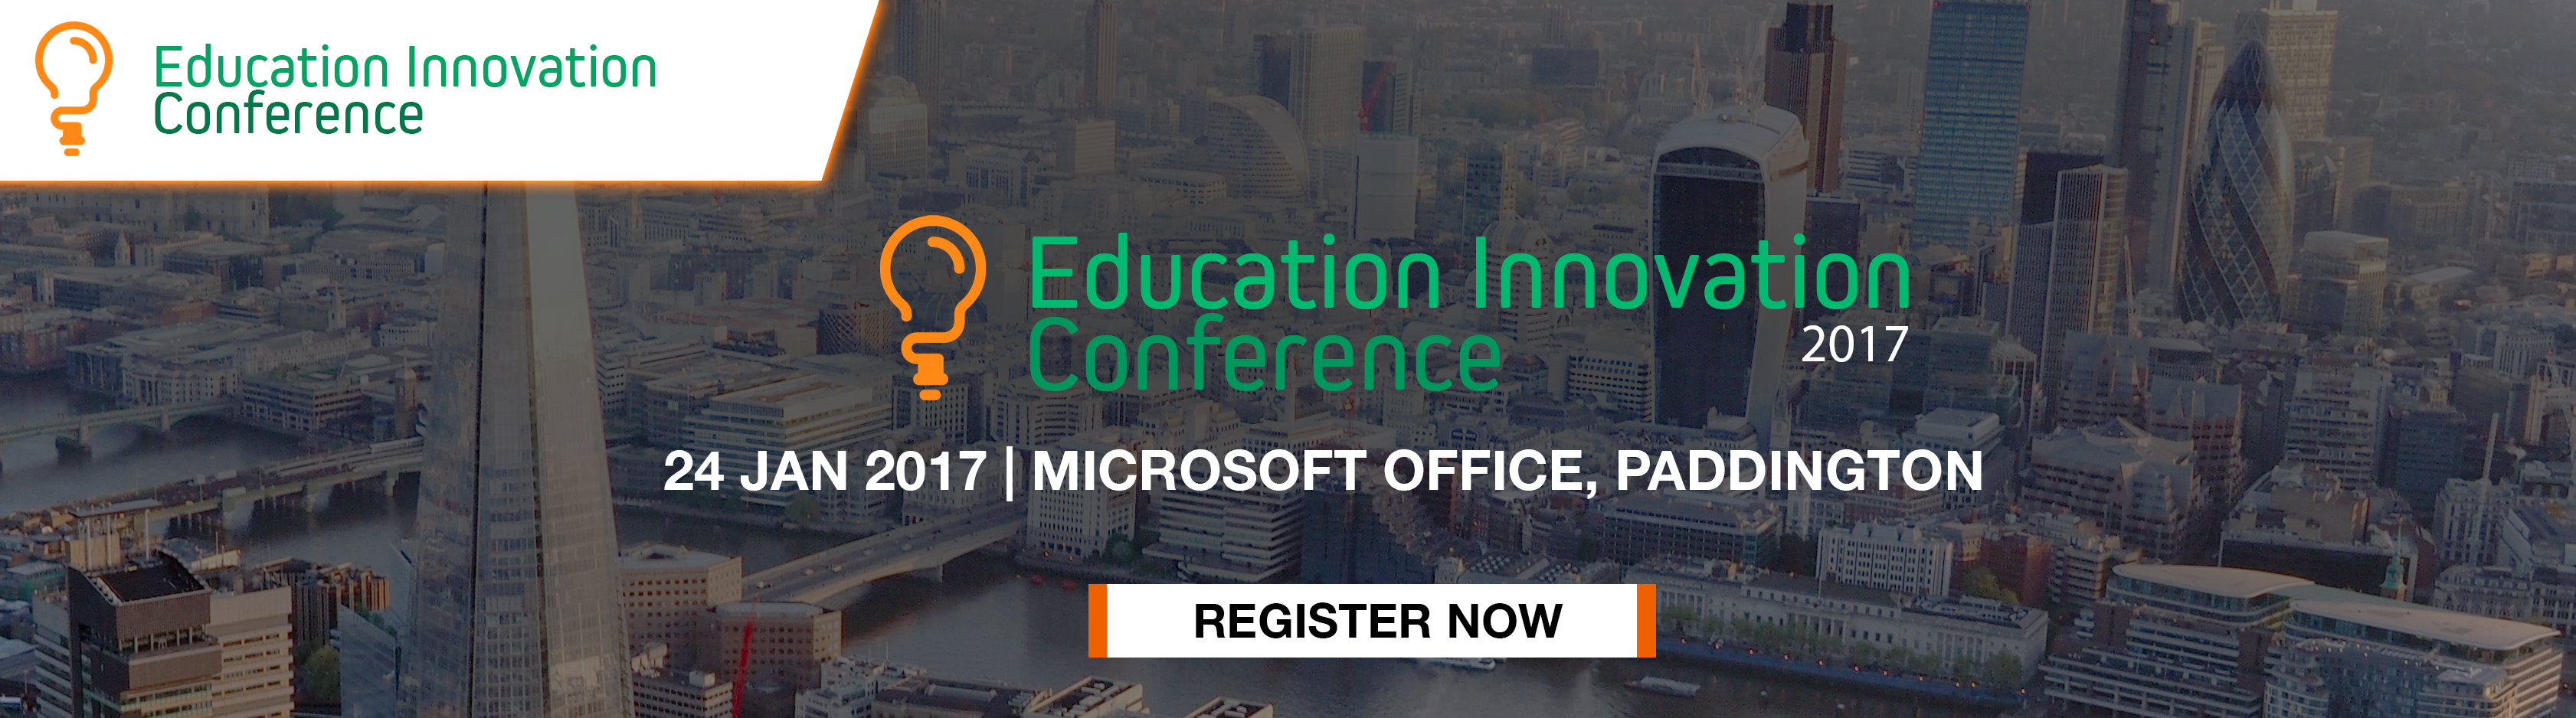 Education Innovation Conference 2017 - EIC2017, London, United Kingdom